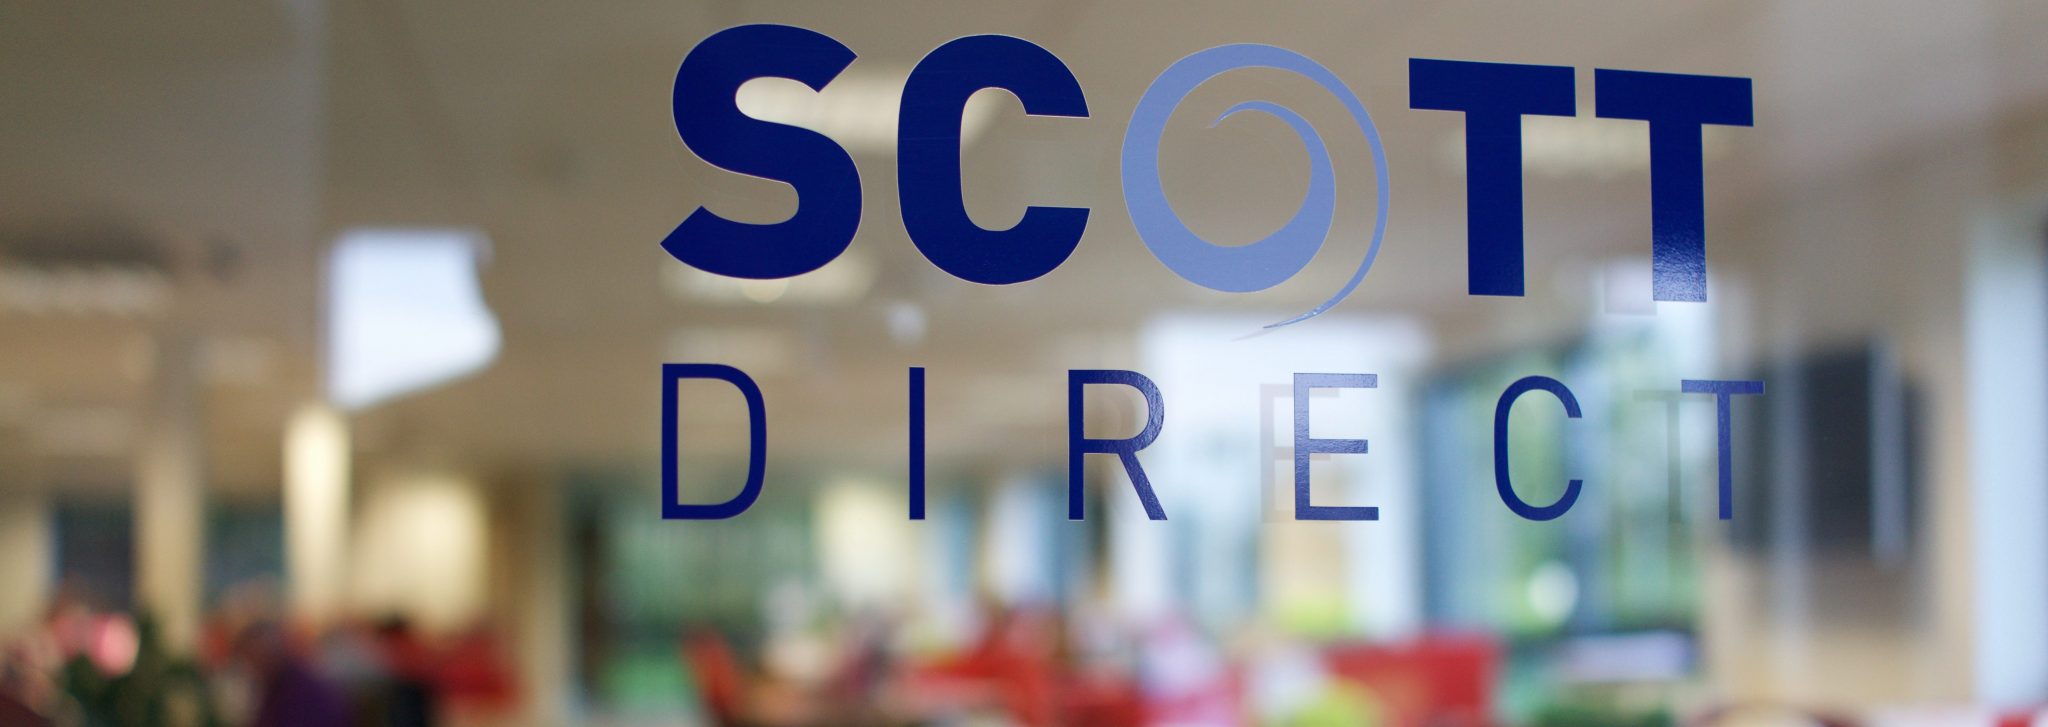 Team boost at Scott Direct